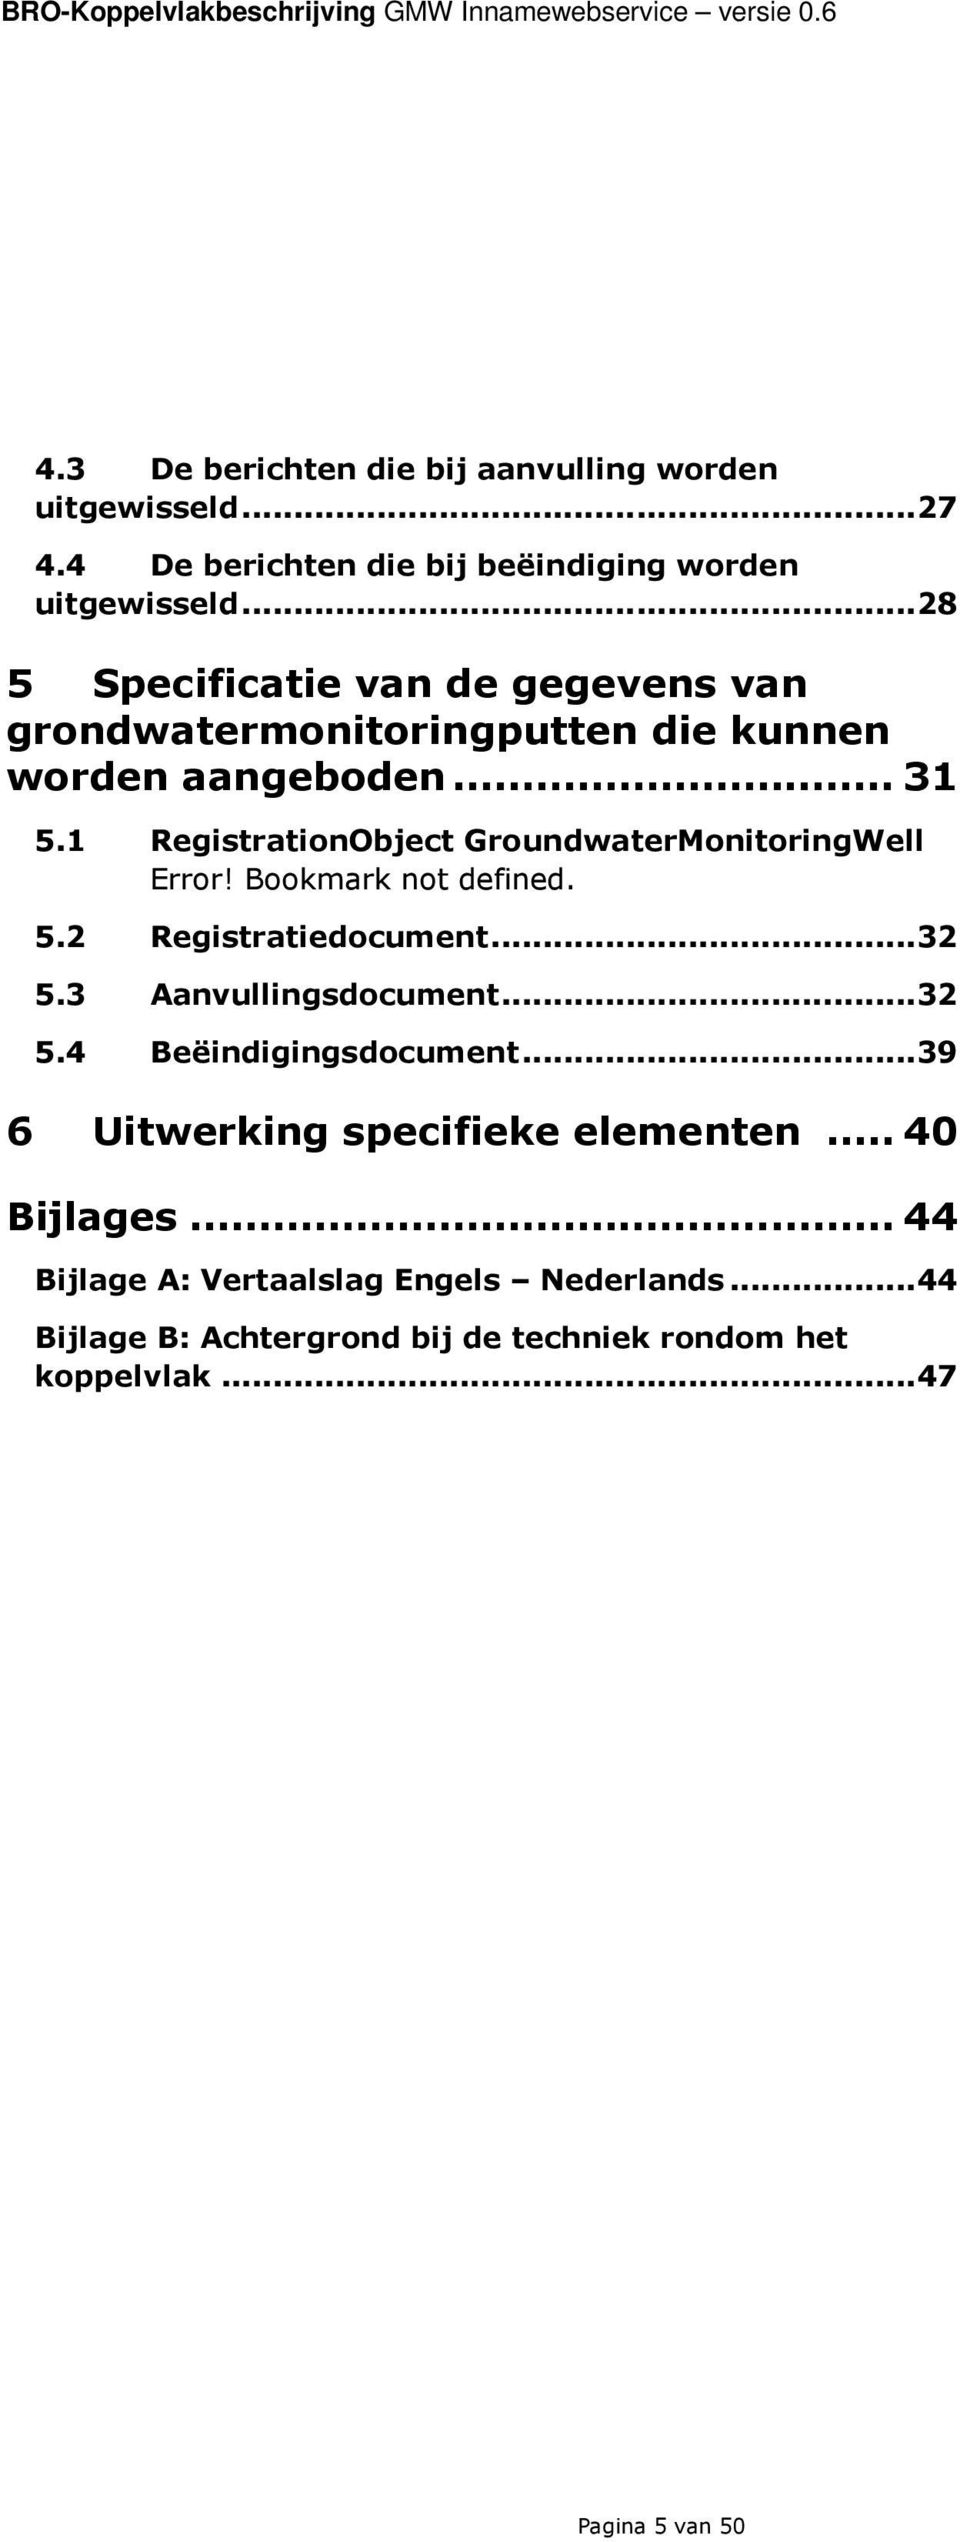 1 RegistrationObject GroundwaterMonitoringWell Error! Bookmark not defined. 5.2 Registratiedocument... 32 5.3 Aanvullingsdocument... 32 5.4 Beëindigingsdocument.